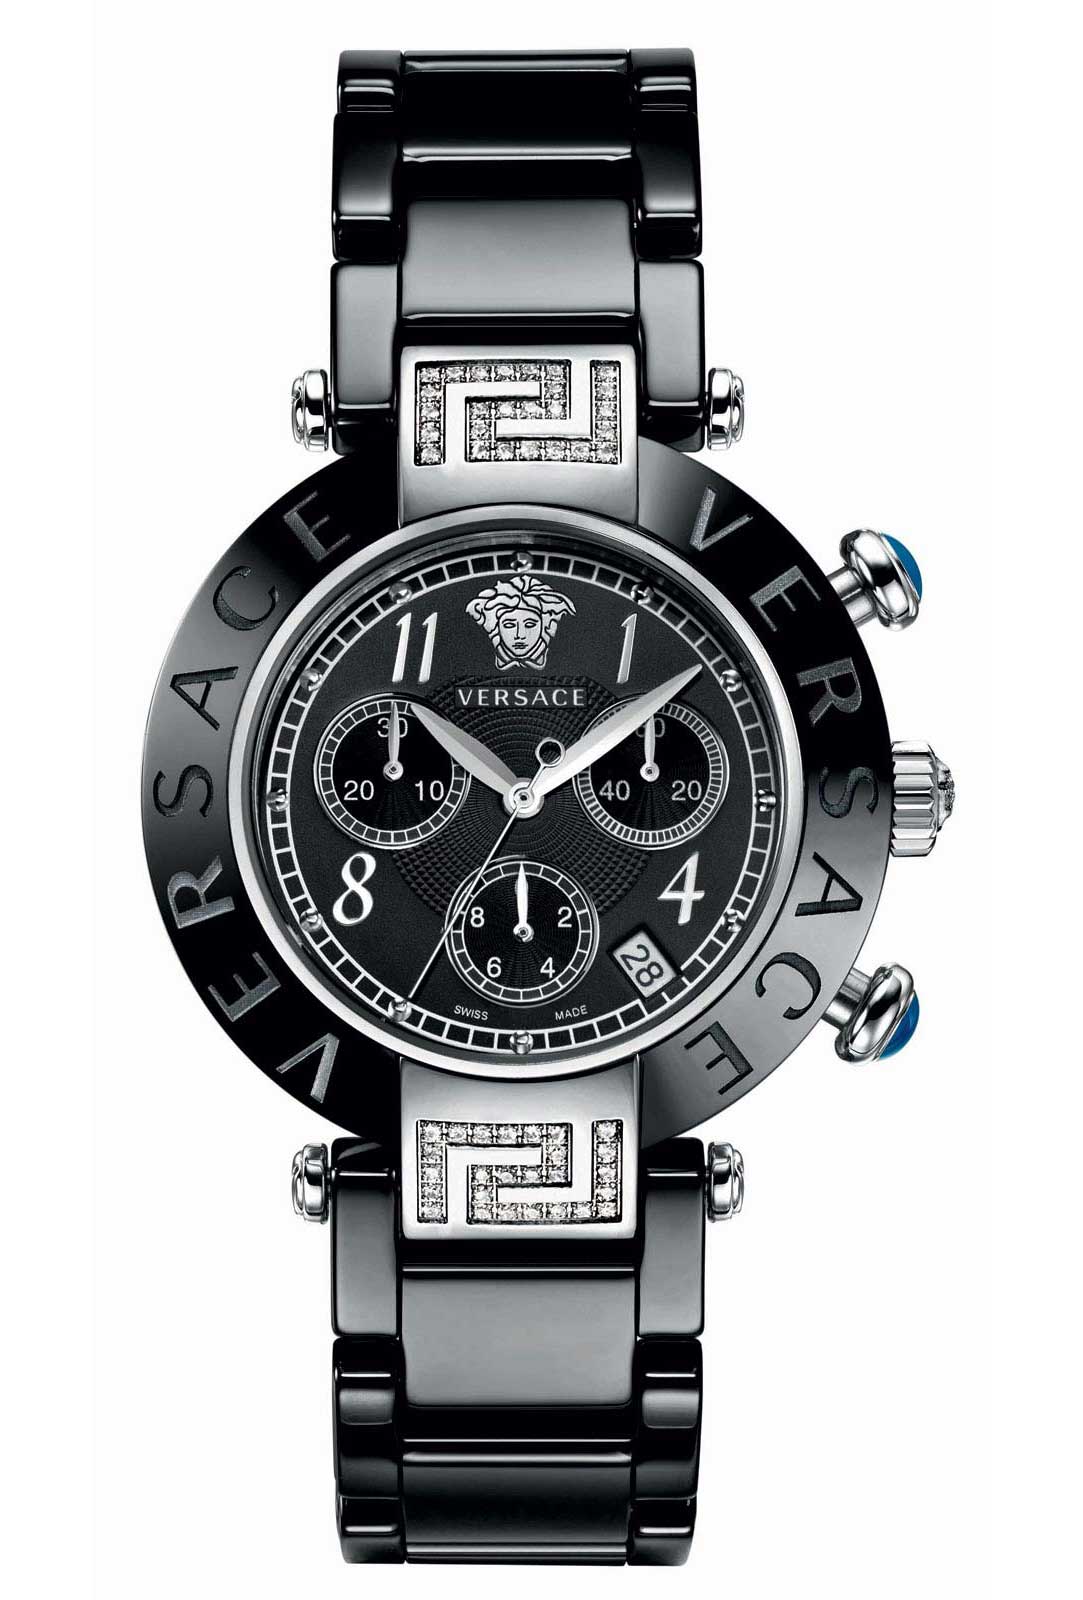 Versace QUARTZ CHRONO watch 5040D STEEL - Click Image to Close